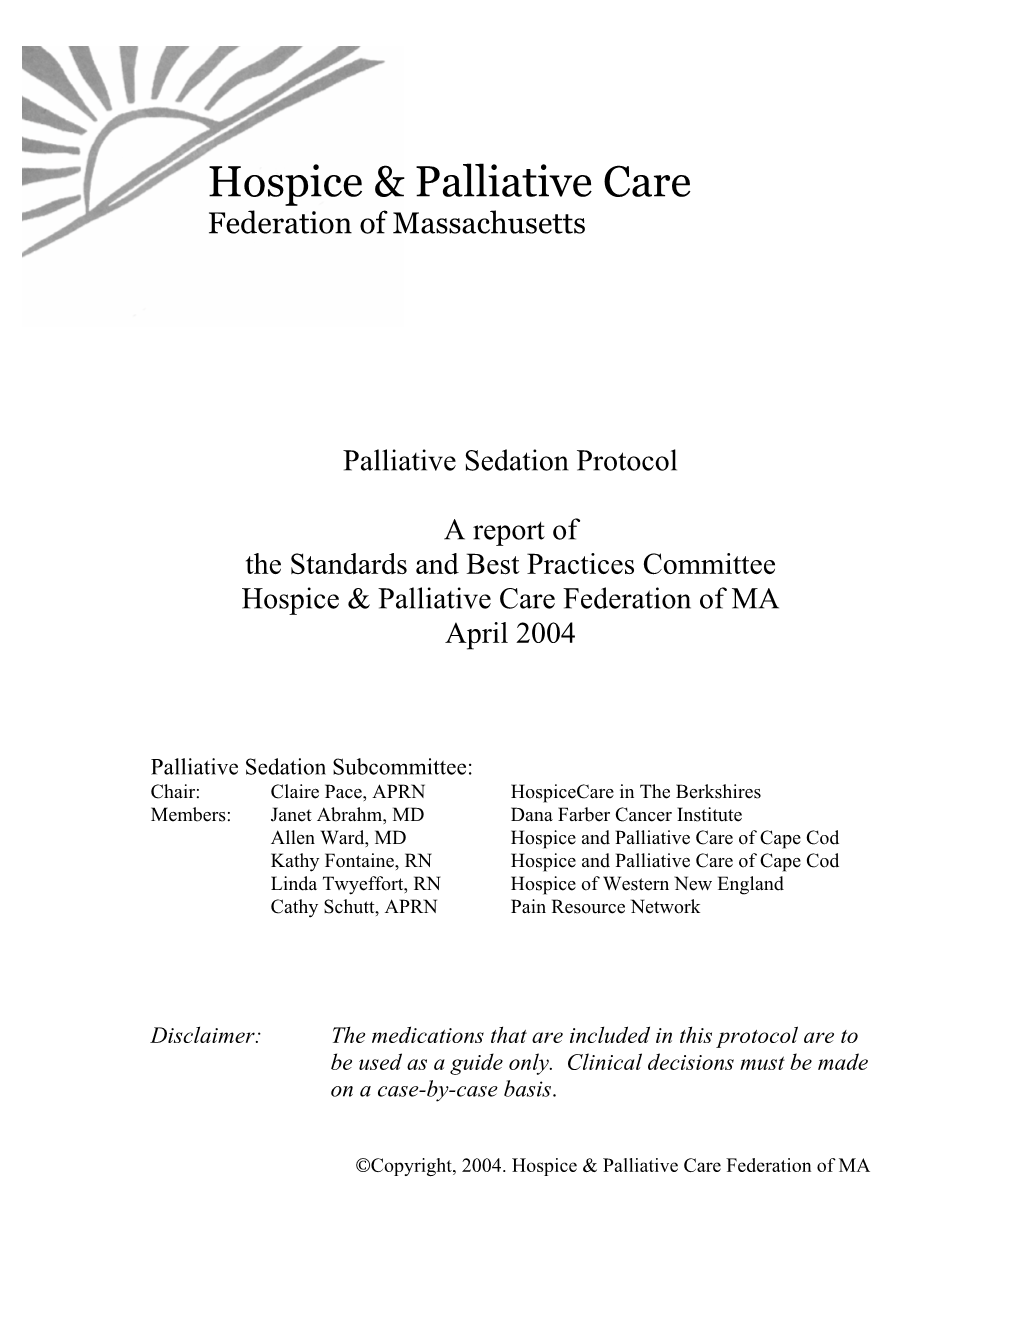 Palliative Sedation Protocol